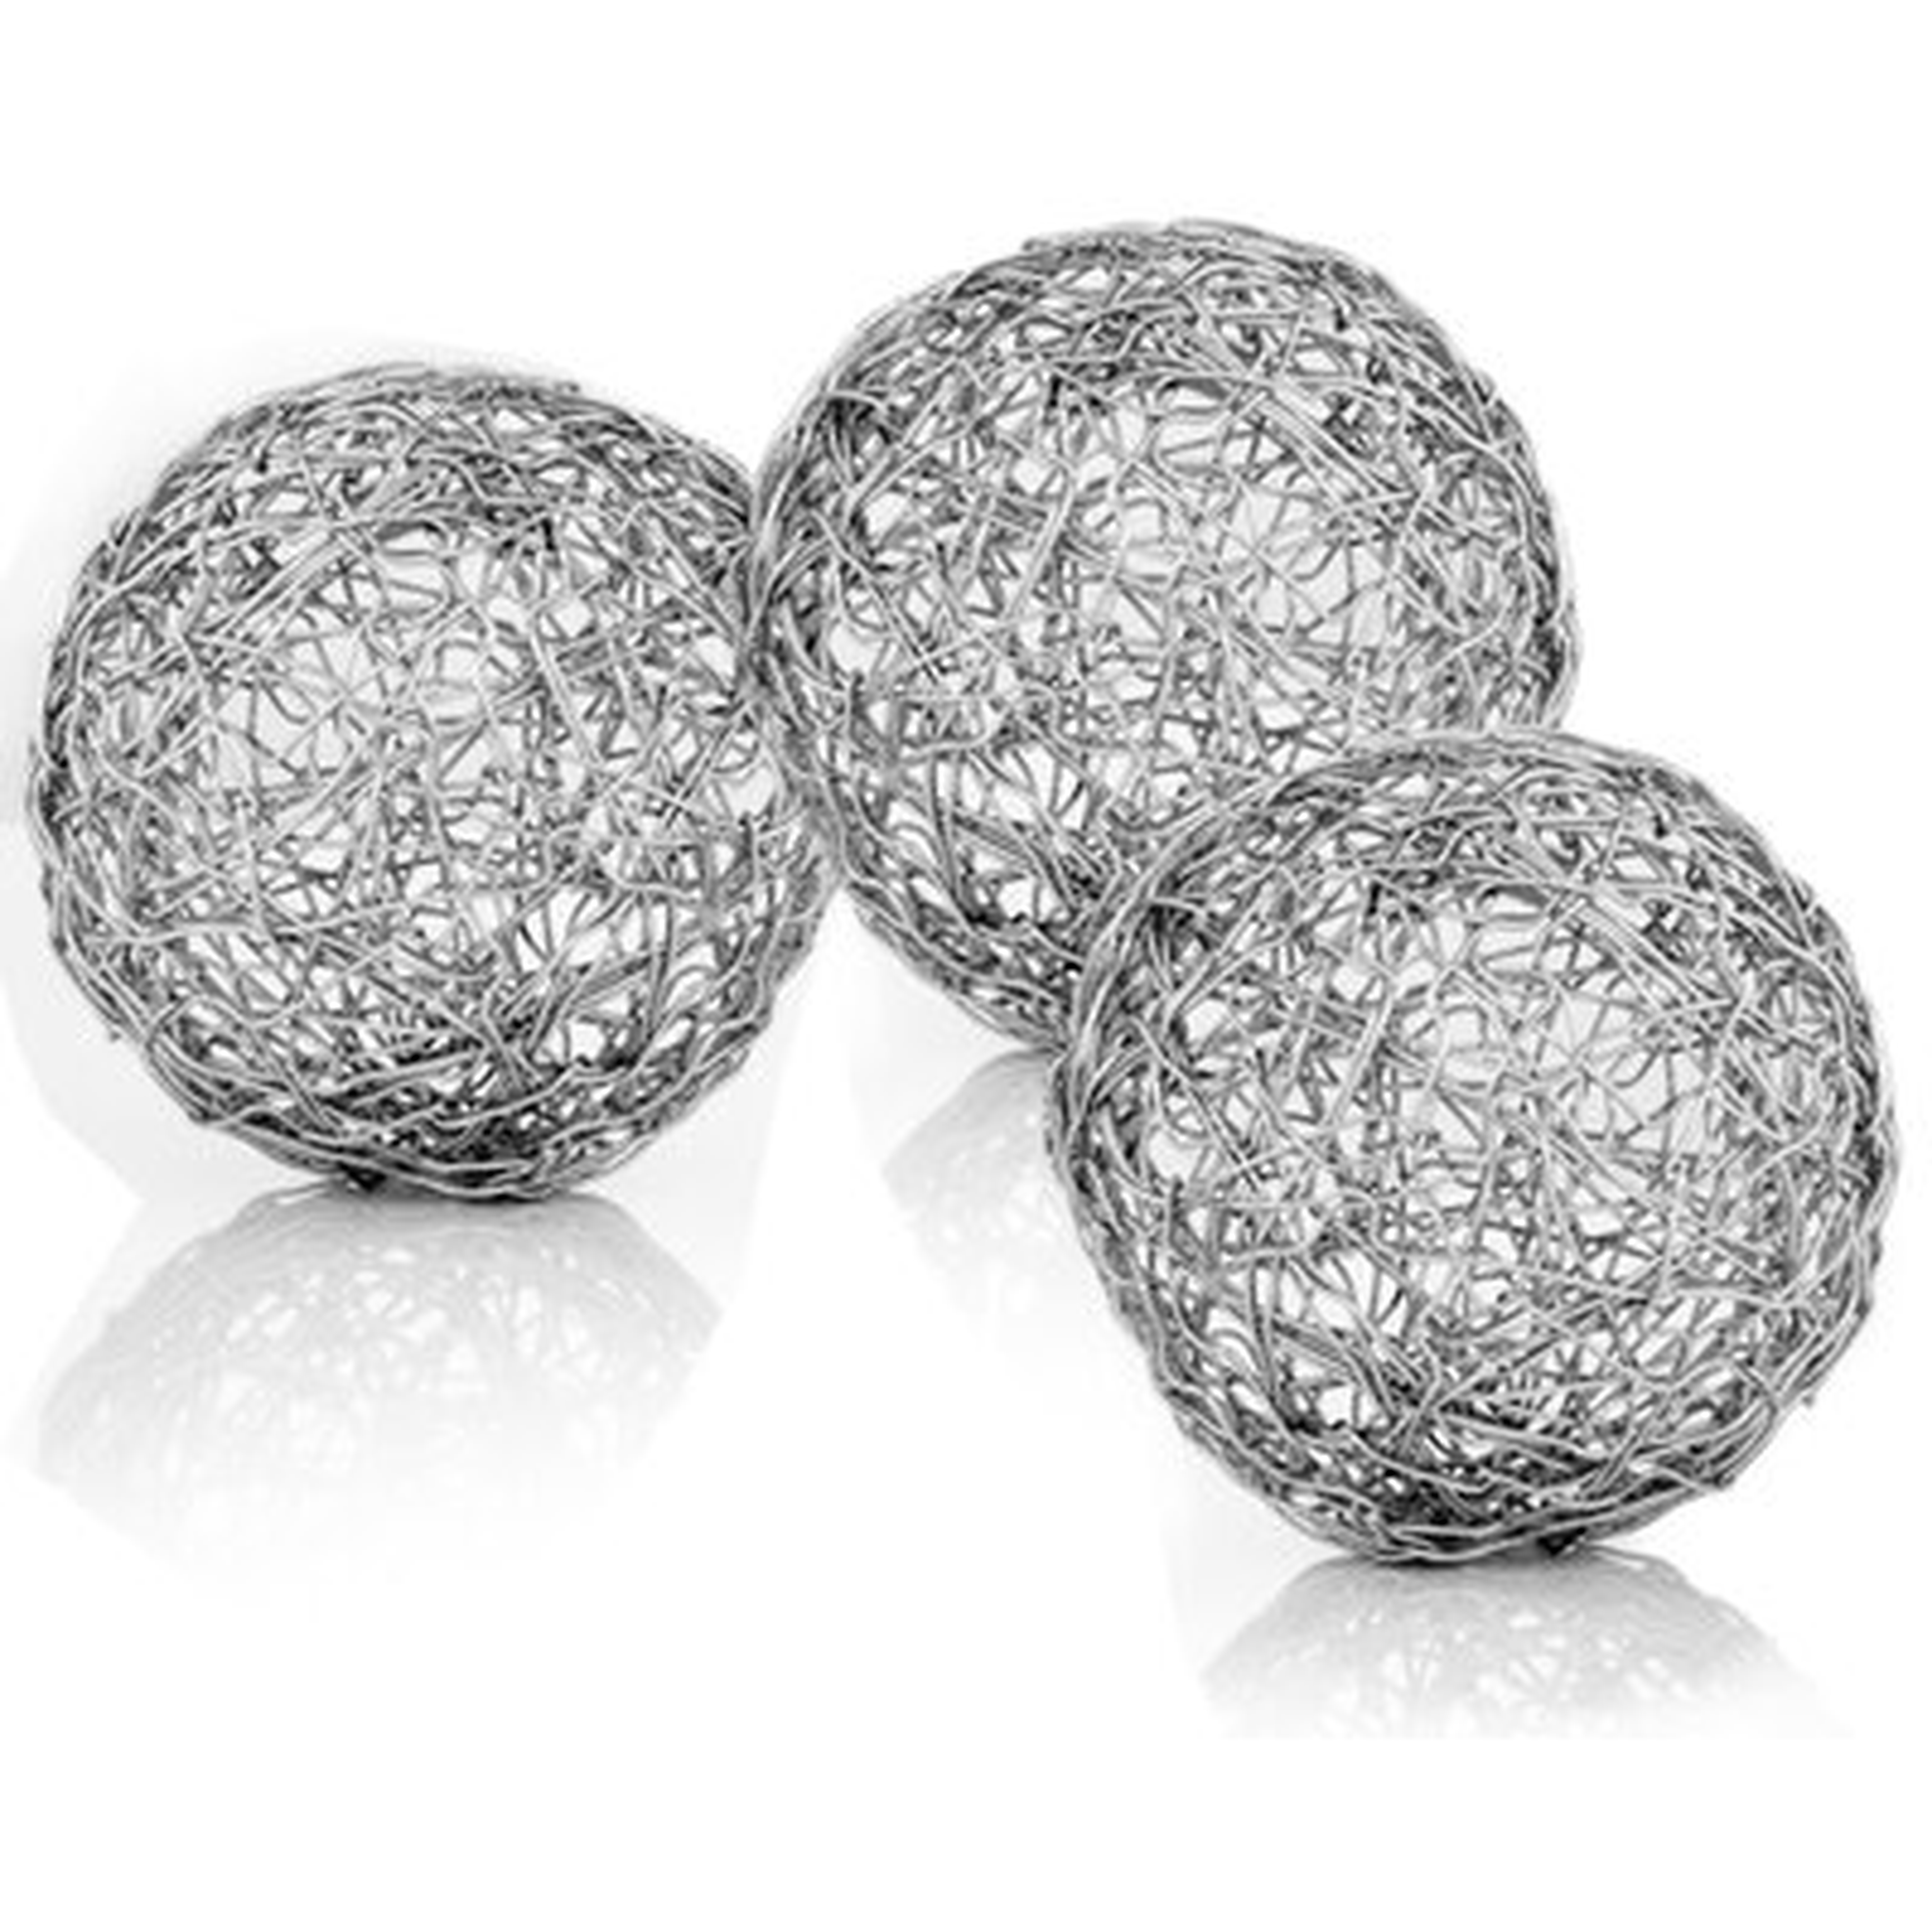 5" X 5" X 5" Shiny Nickel Silver Wire Spheres Box Of 3 - Wayfair